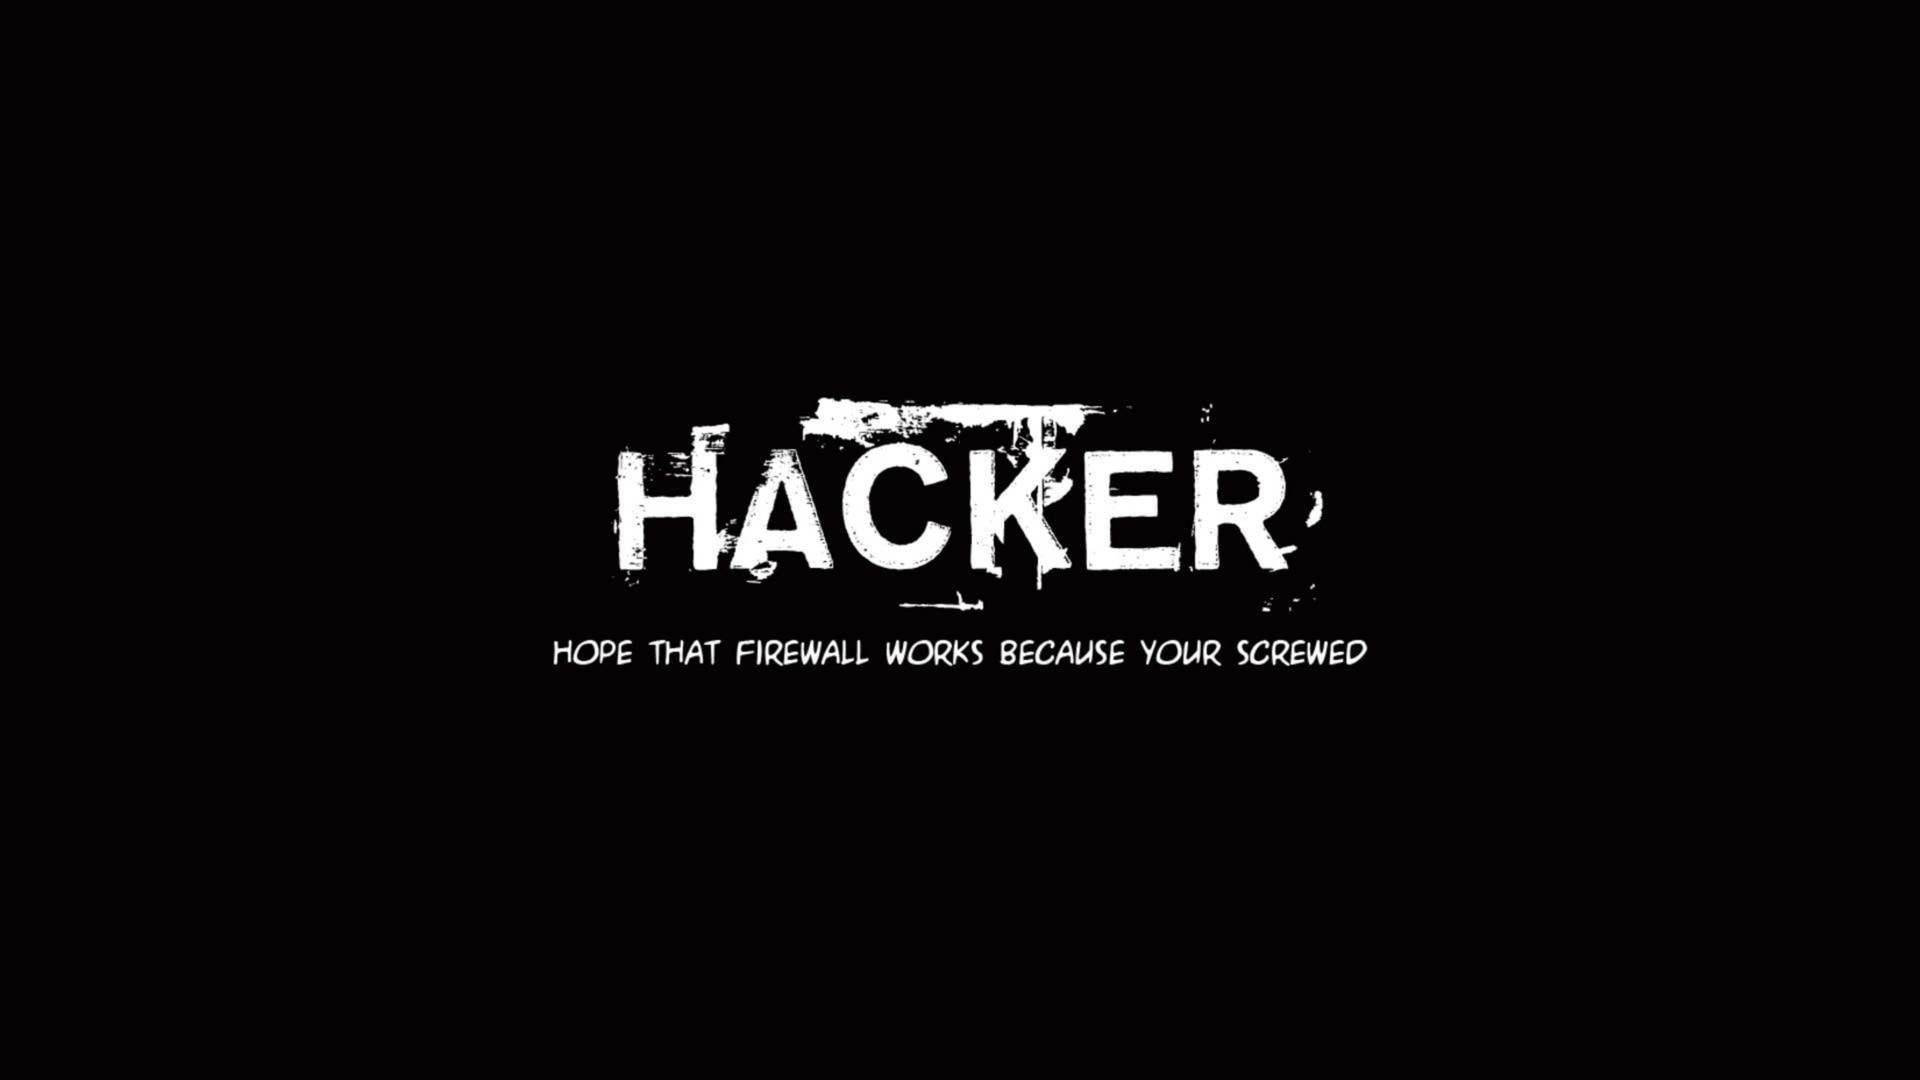 Firewall Hacker 4k Typography Background